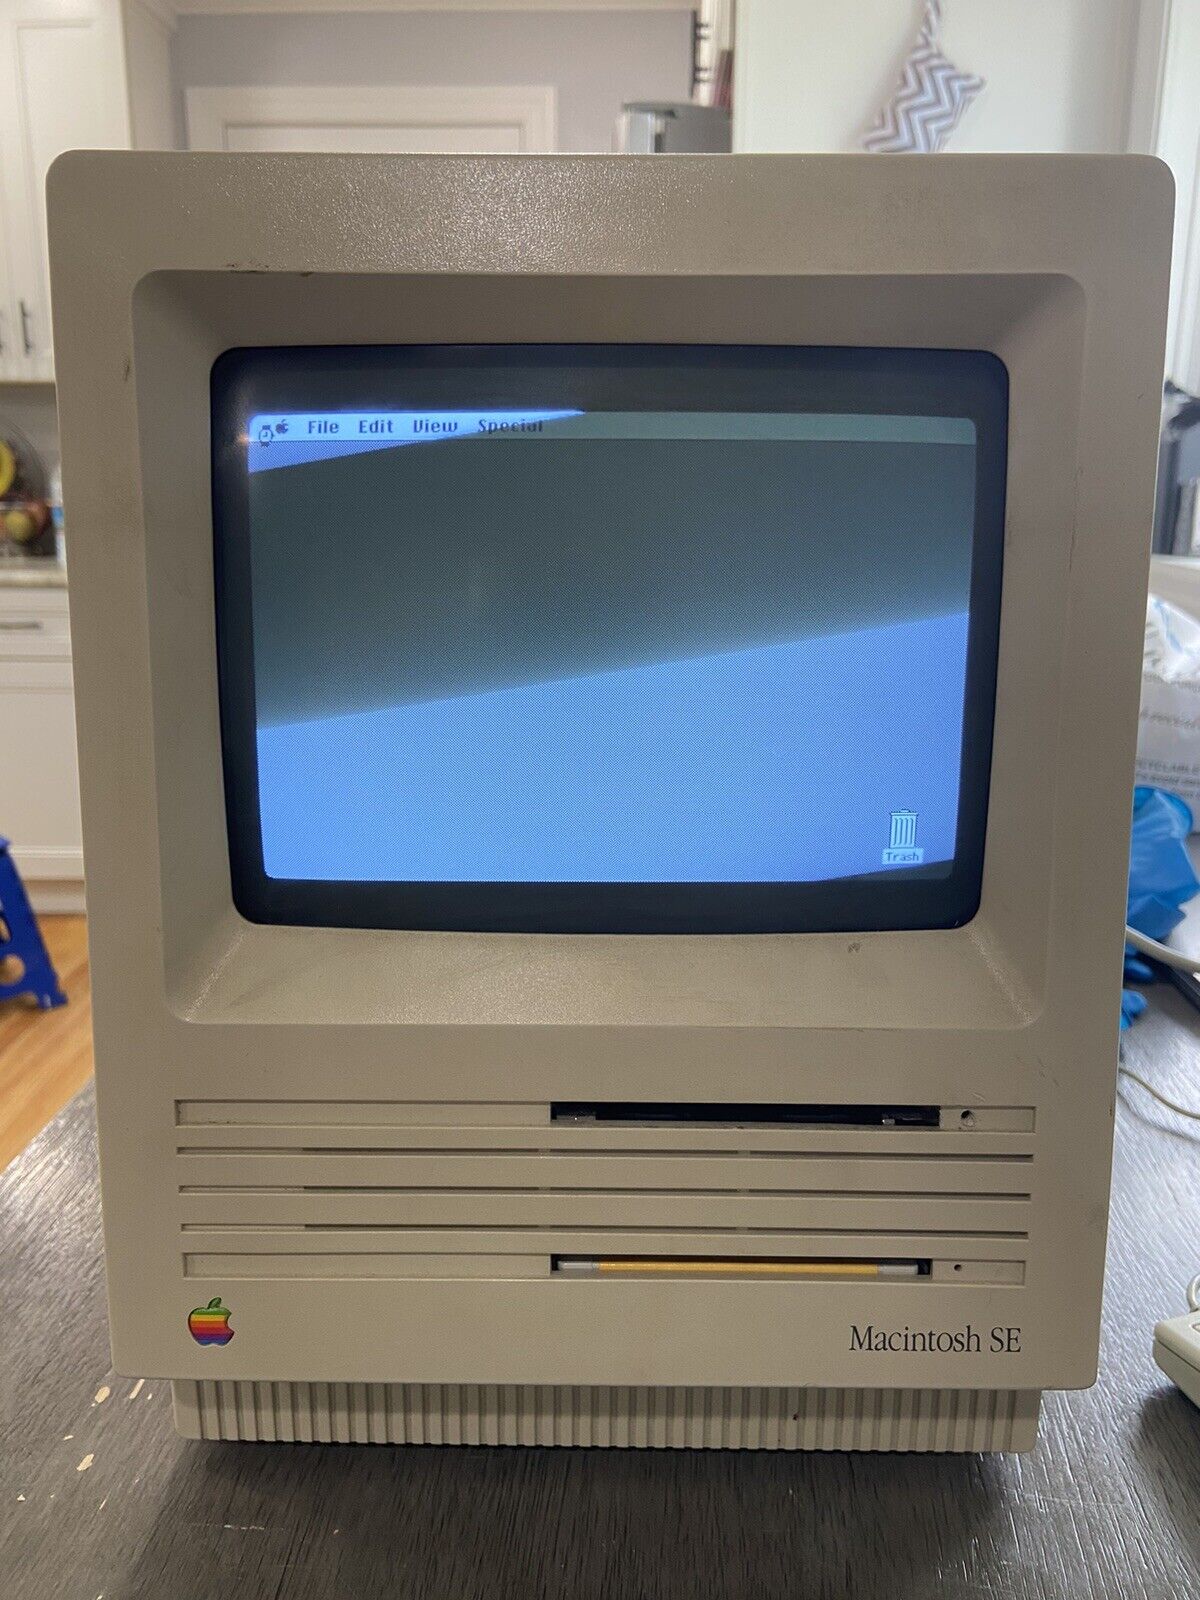 Macintosh SE M5010 Dual 800k Computer 1 MB Dual Floppy 1987 Mouse No KB Tested